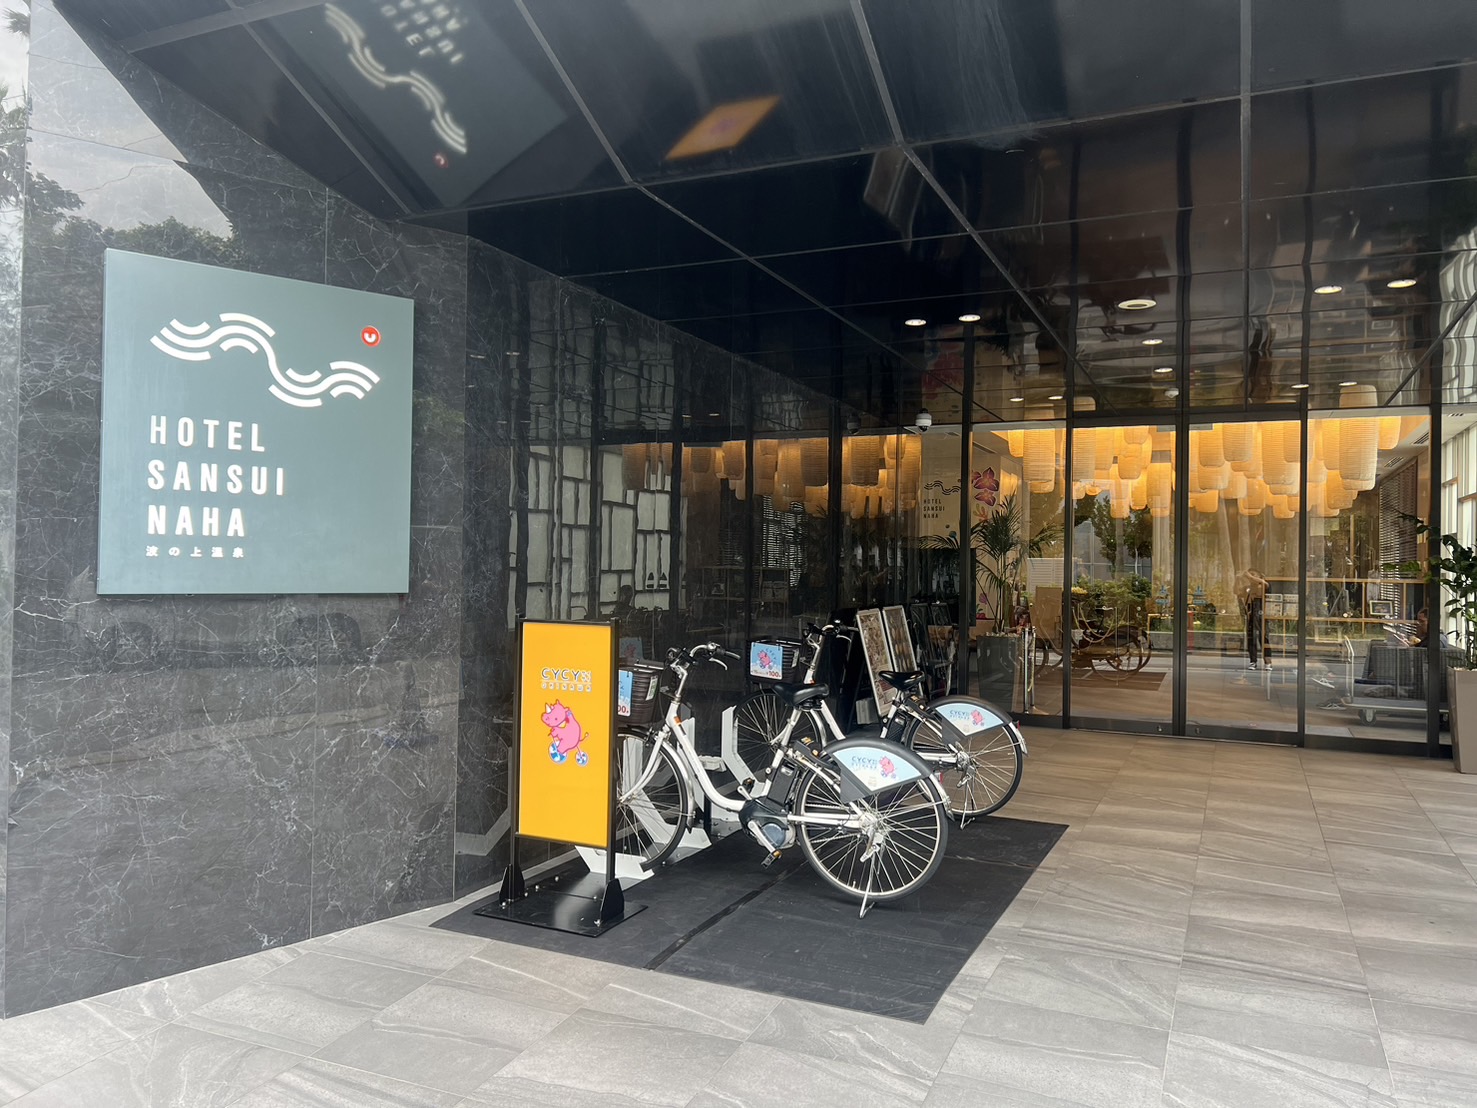 HOTEL SANSUI NAHA (HELLO CYCLING ポート) image